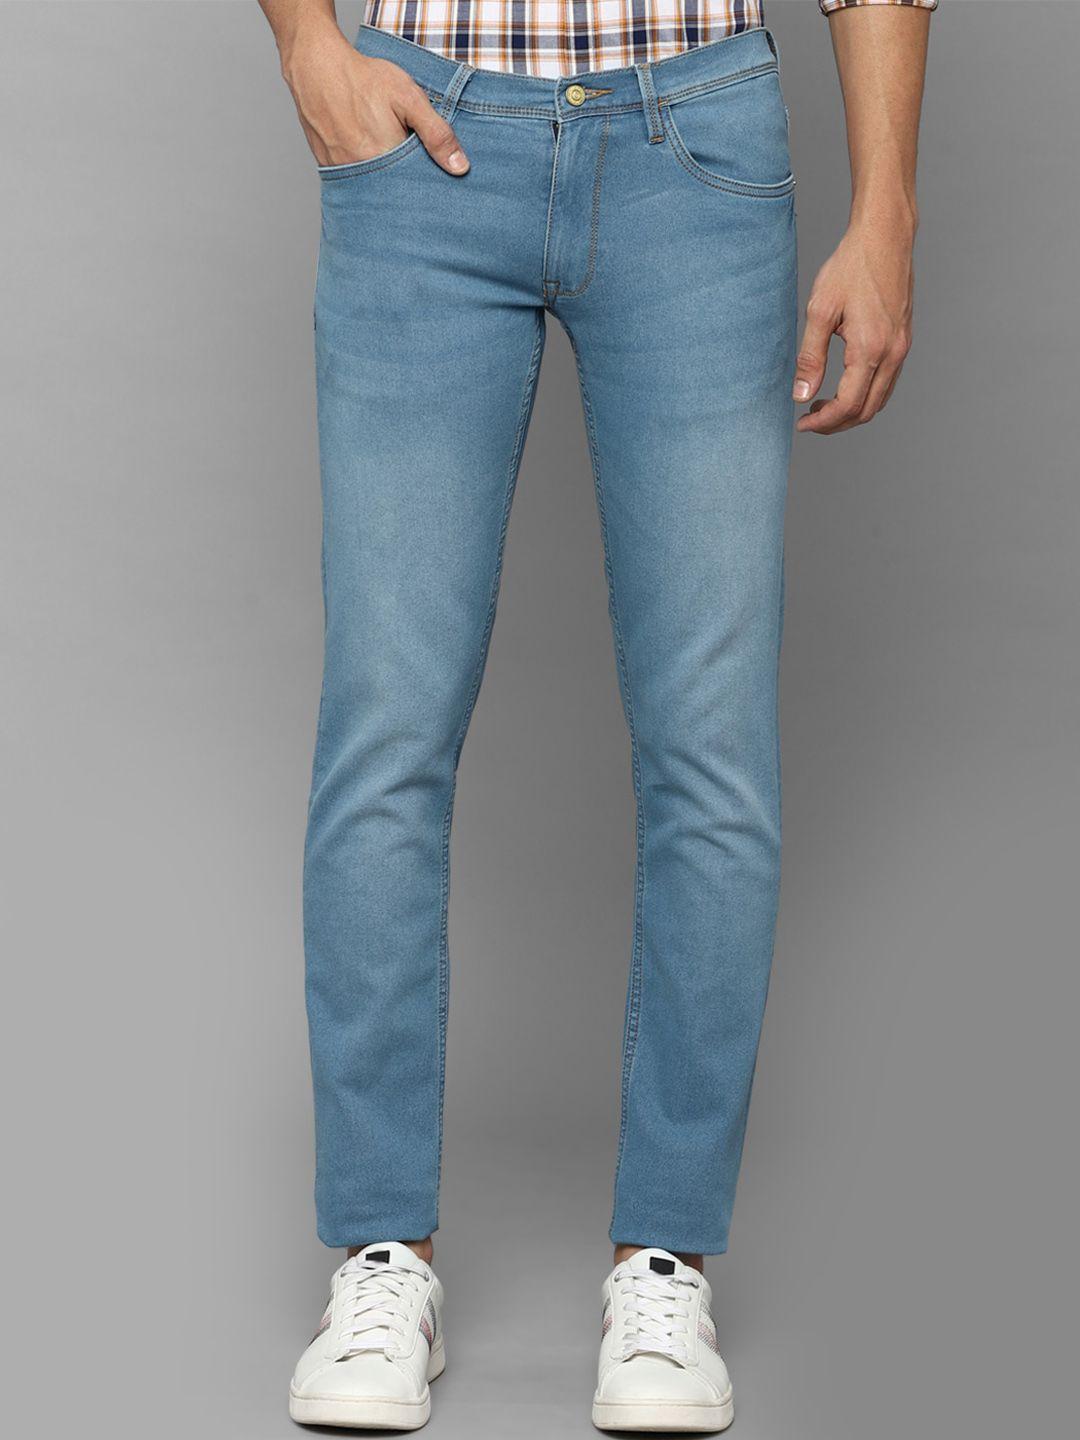 allen-solly-men-blue-skinny-fit-light-fade-cotton-jeans